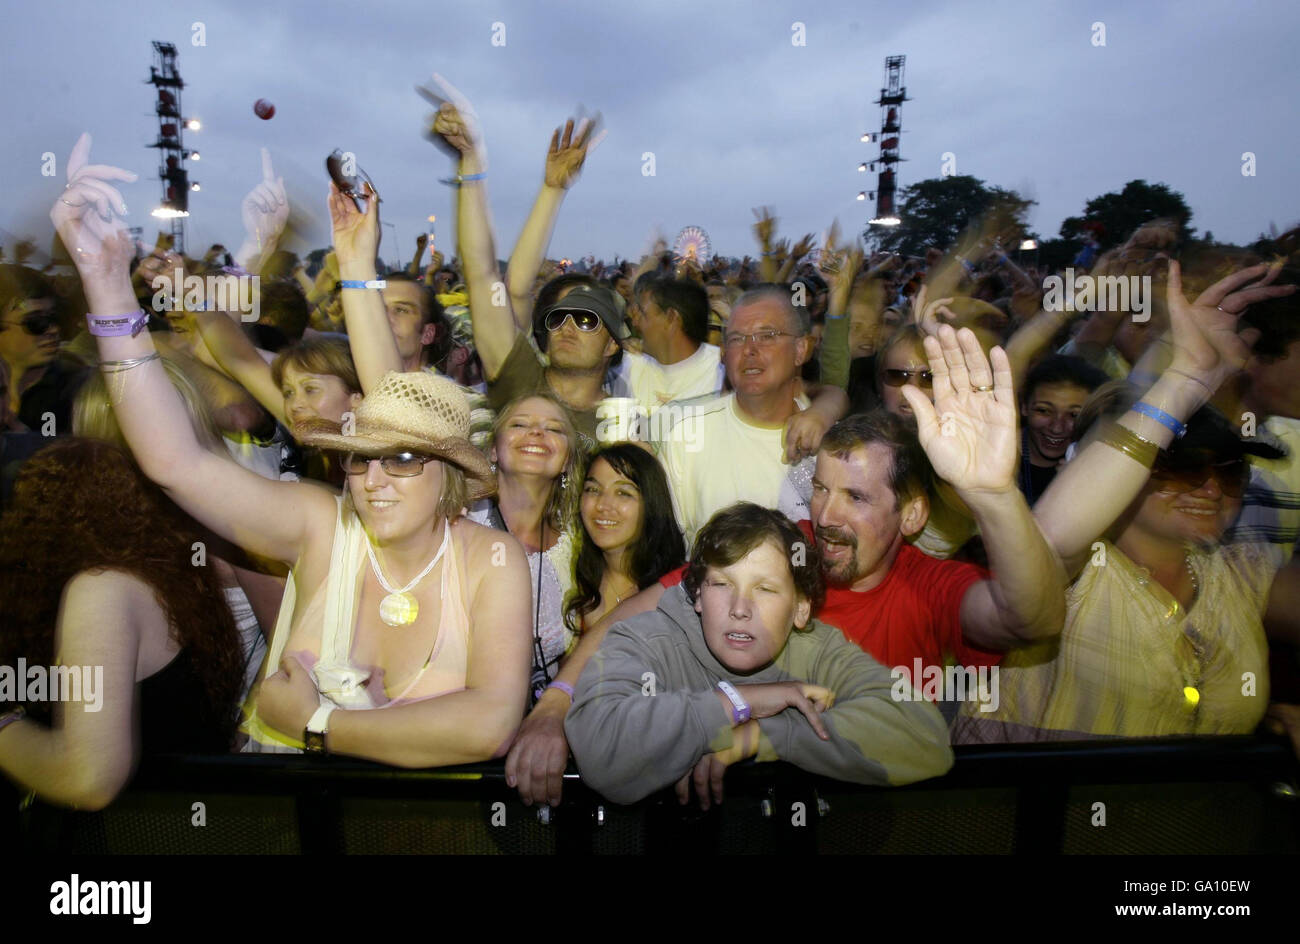 Isle of Wight Festival 2007. Fans watch Groove Armada perform at the Isle of Wight Festival. Stock Photo